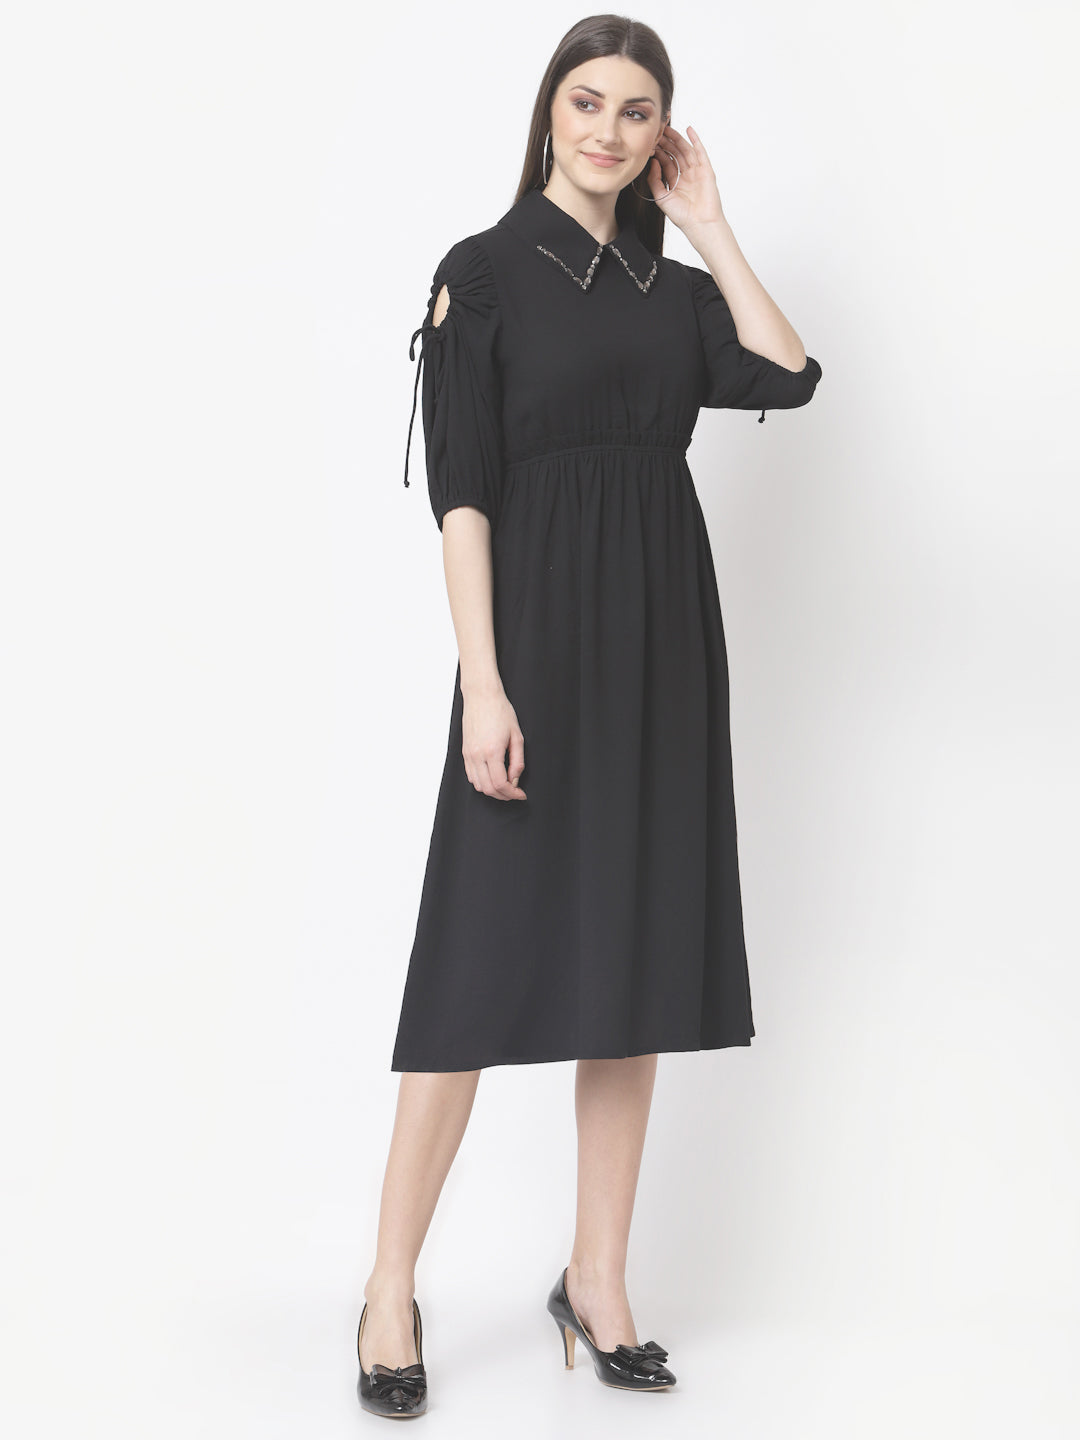 Blanc9 Black Embellished Collar Dress-B9DR104